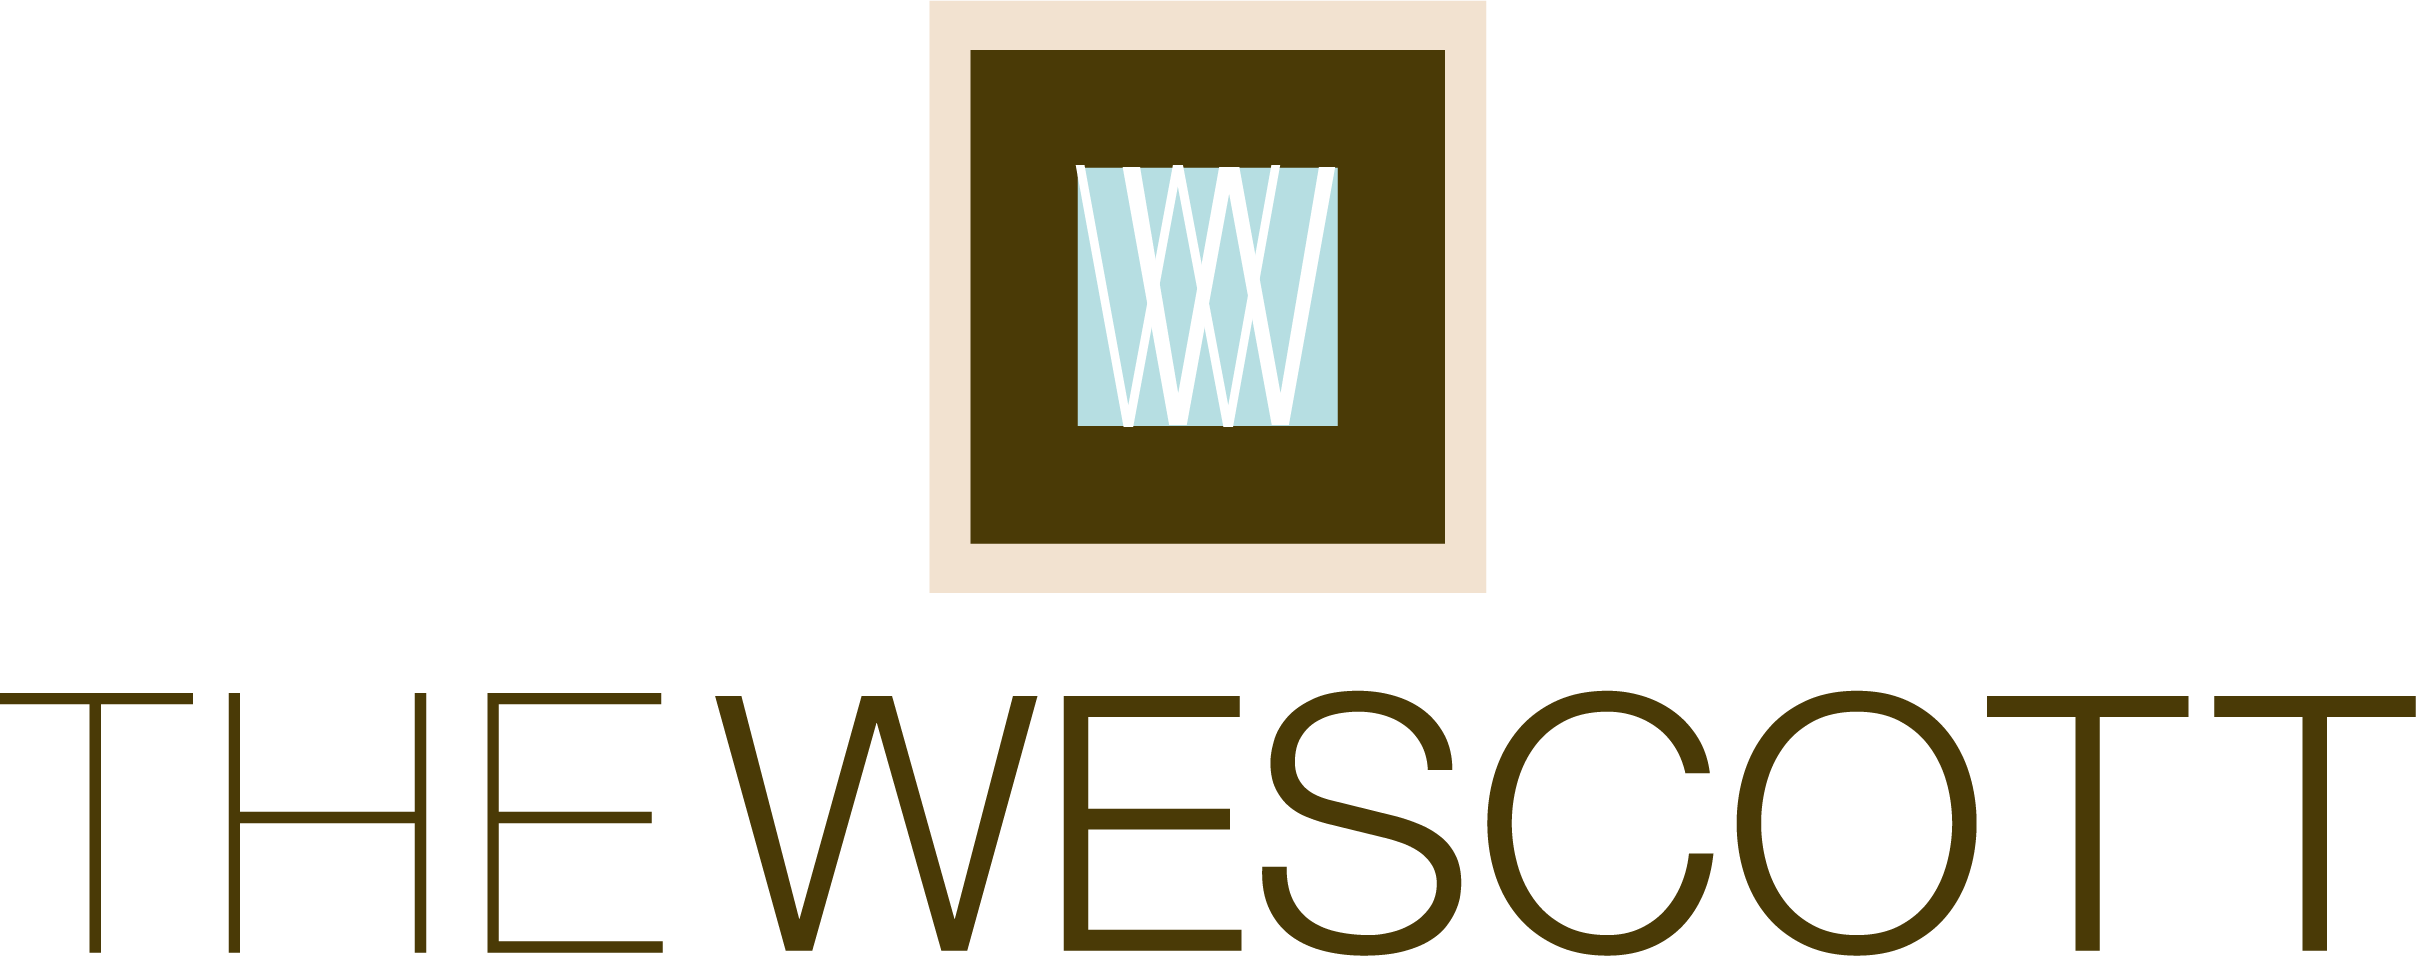 Wescott | Apartments for rent Bloomfield NJ logo